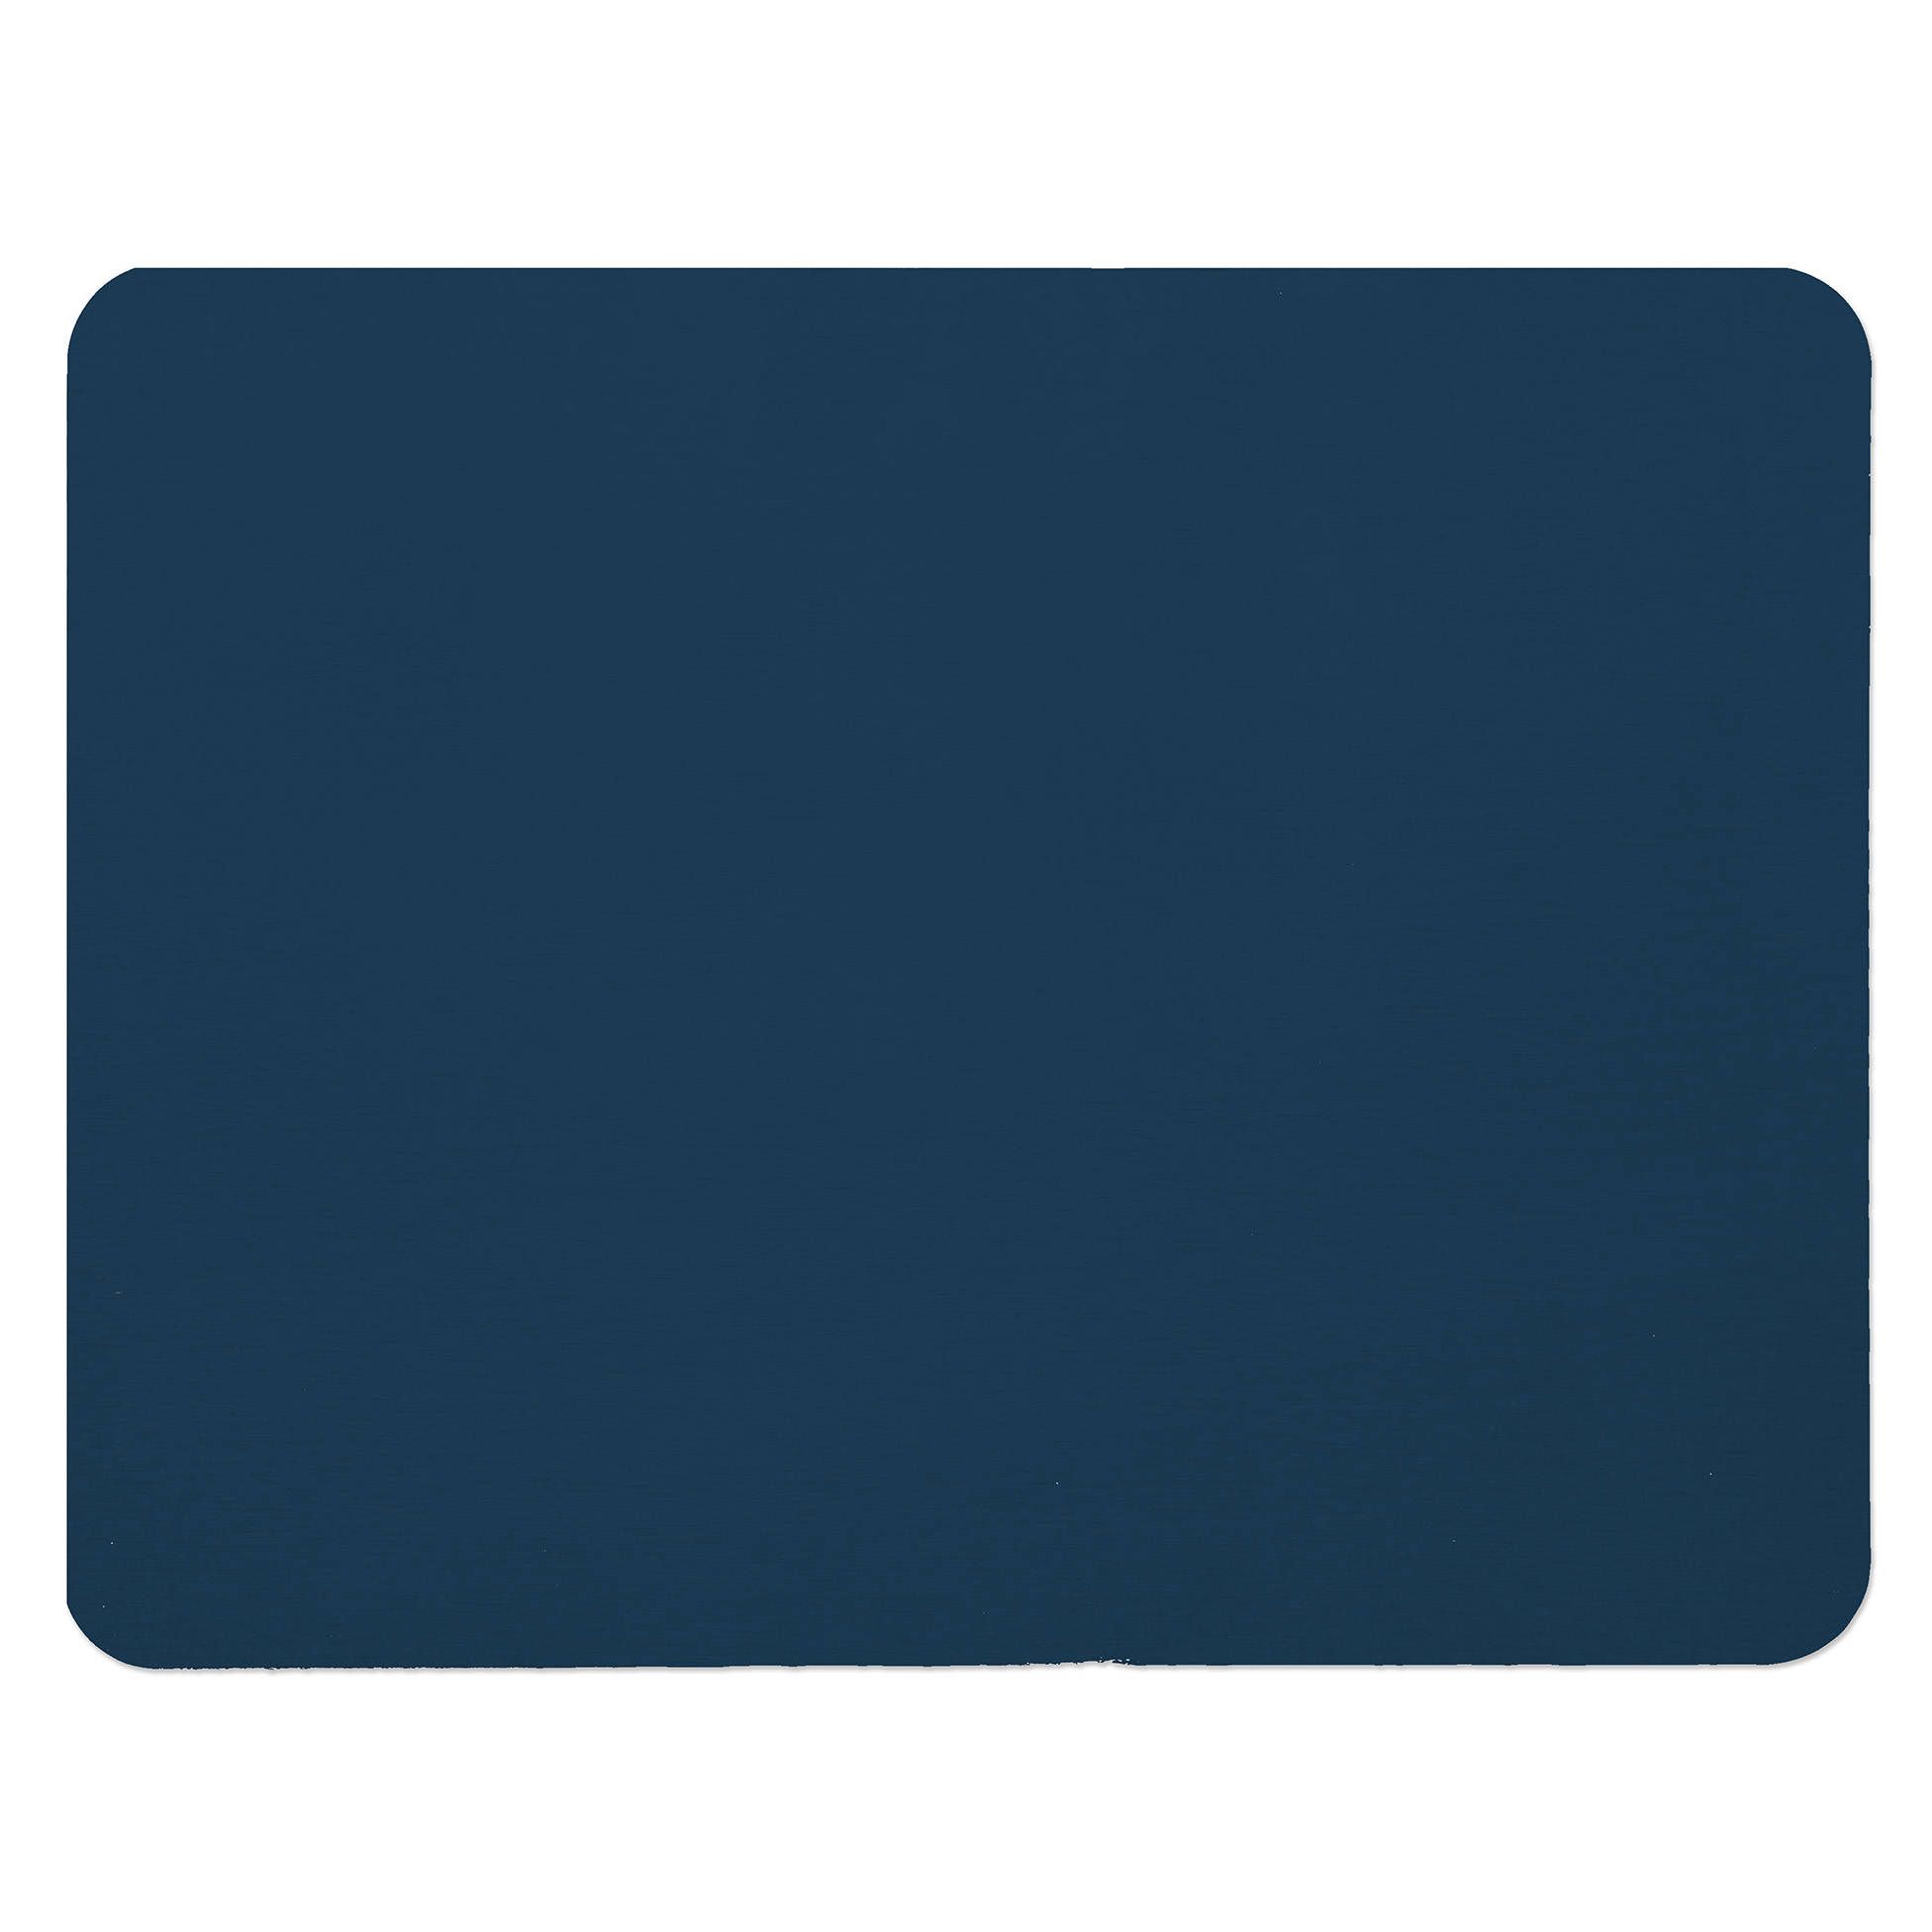 Douceur d\'intérieur Sprchová podložka DIATONELLA, 35 x 45 cm, tmavě modrá - EMAKO.CZ s.r.o.